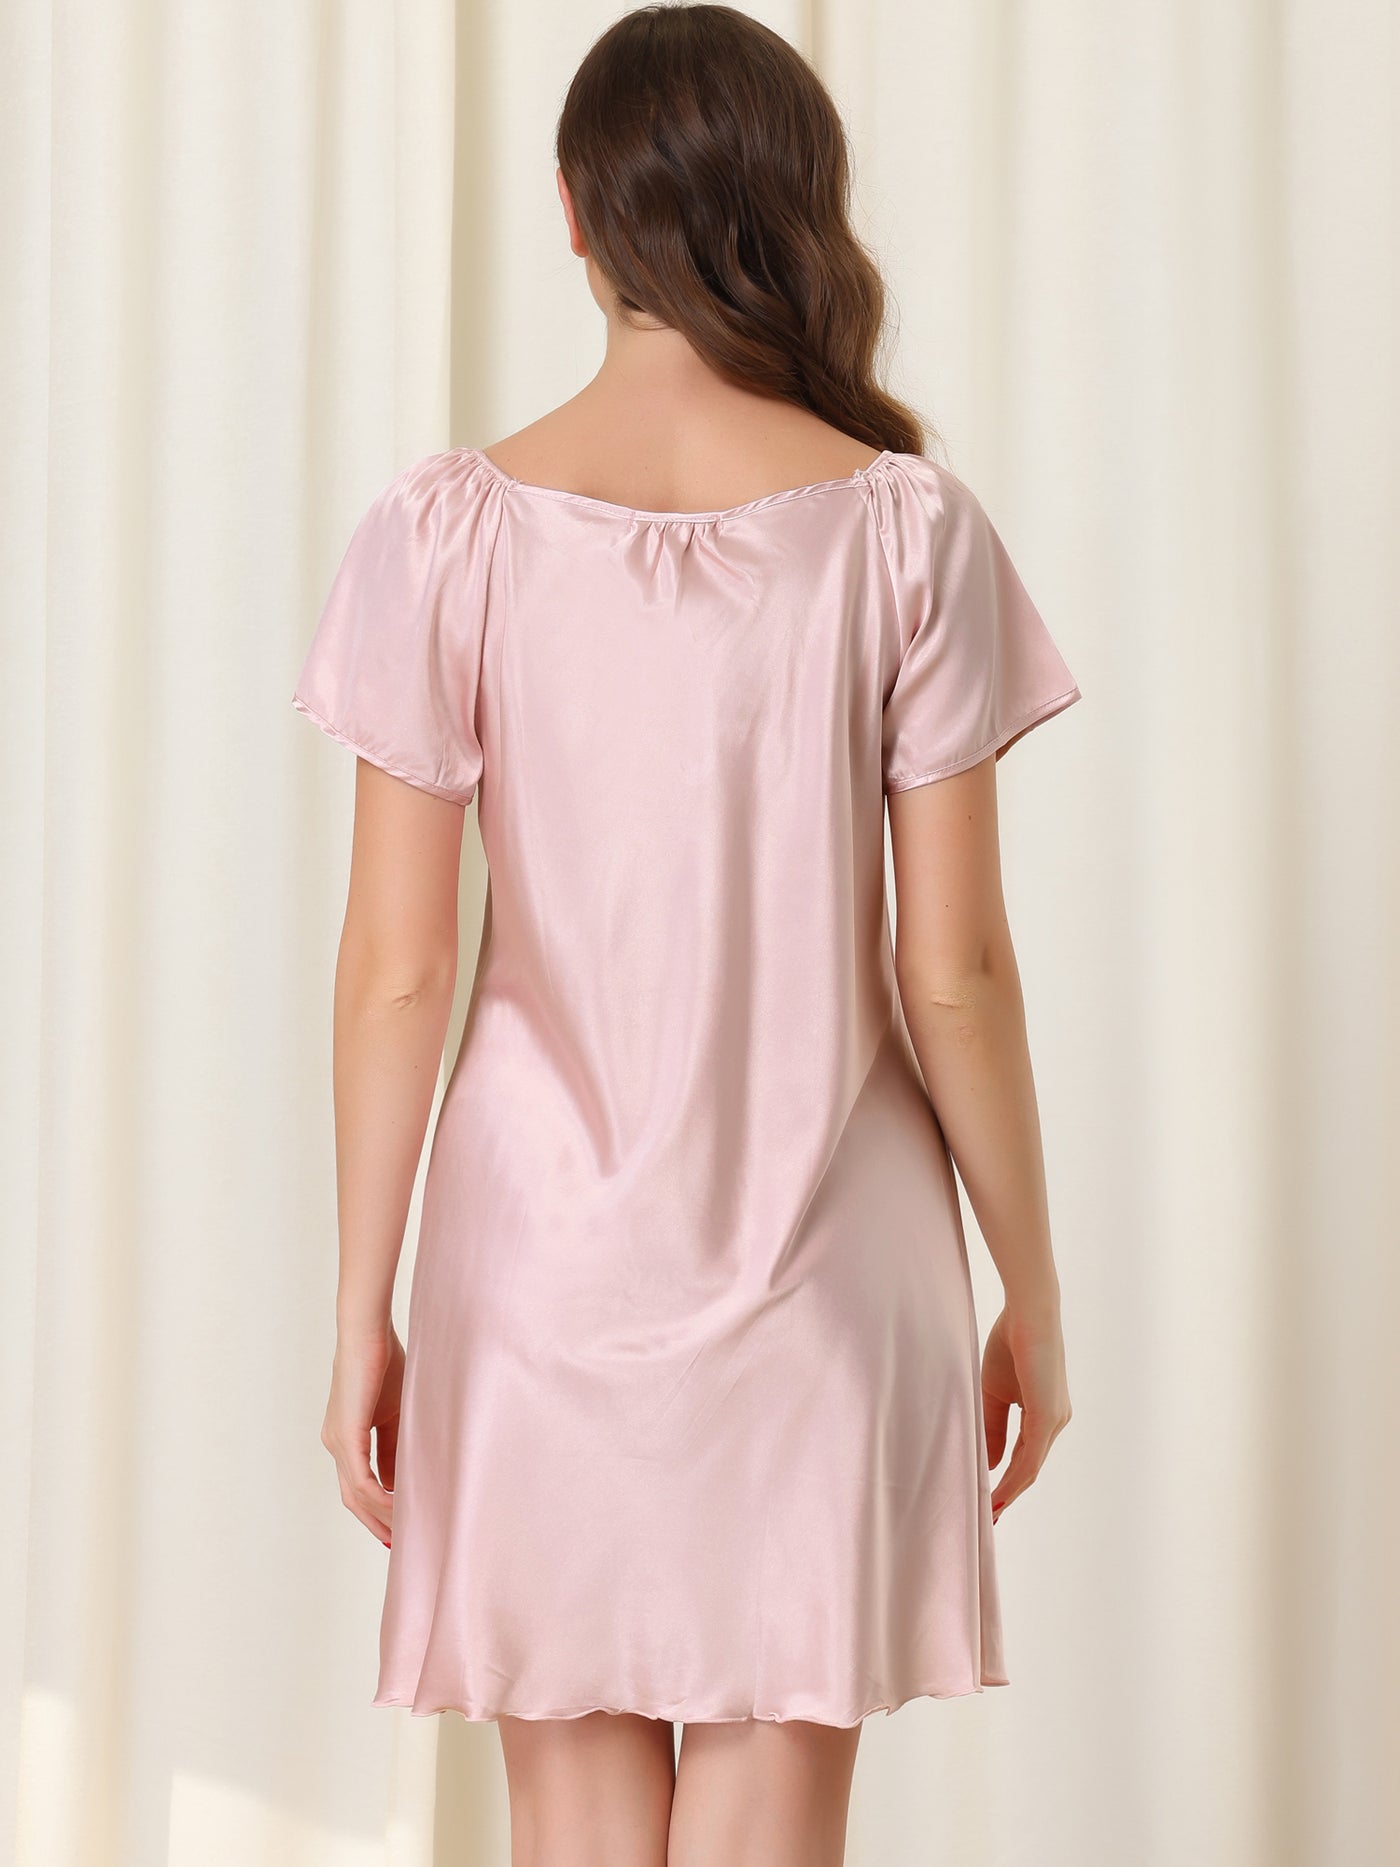 Bublédon Womens Satin Sleepwear Pajama Dress Nightshirt Soft Lounge Nightgowns